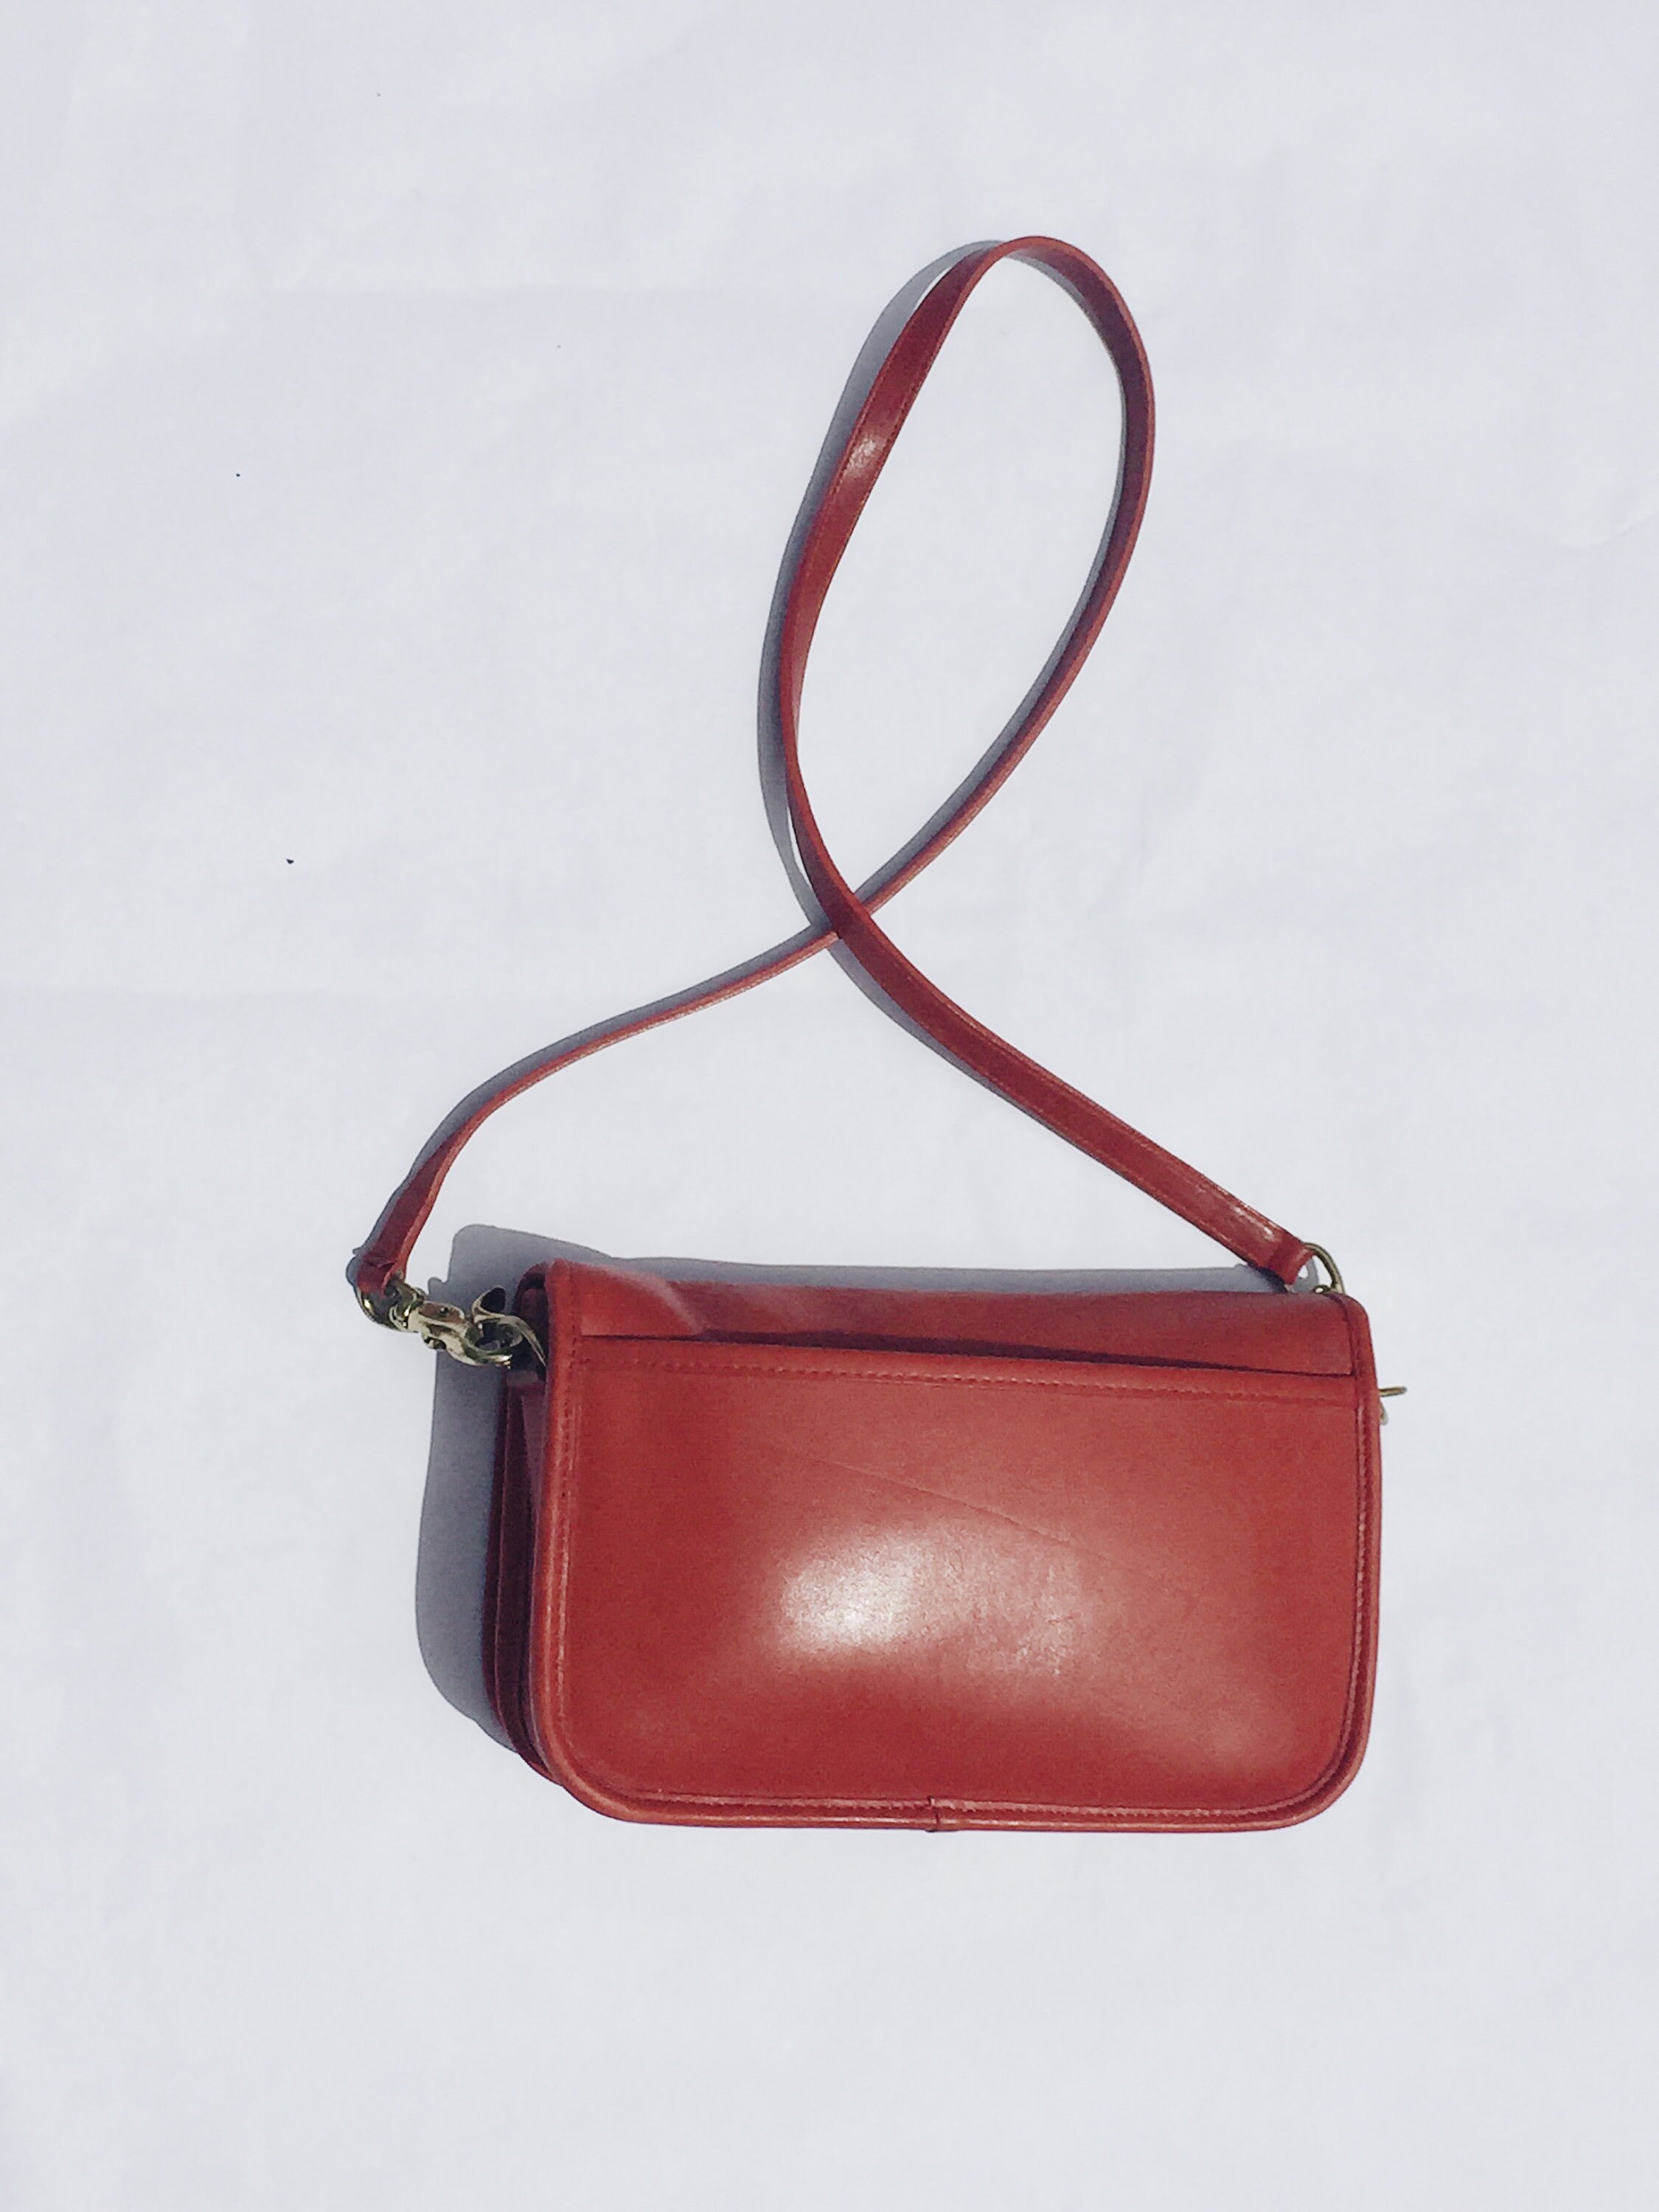 Vintage 1990s red crossbody COACH purse, adjustable strap, red COACH bag, Able Shoppe, coach handbag